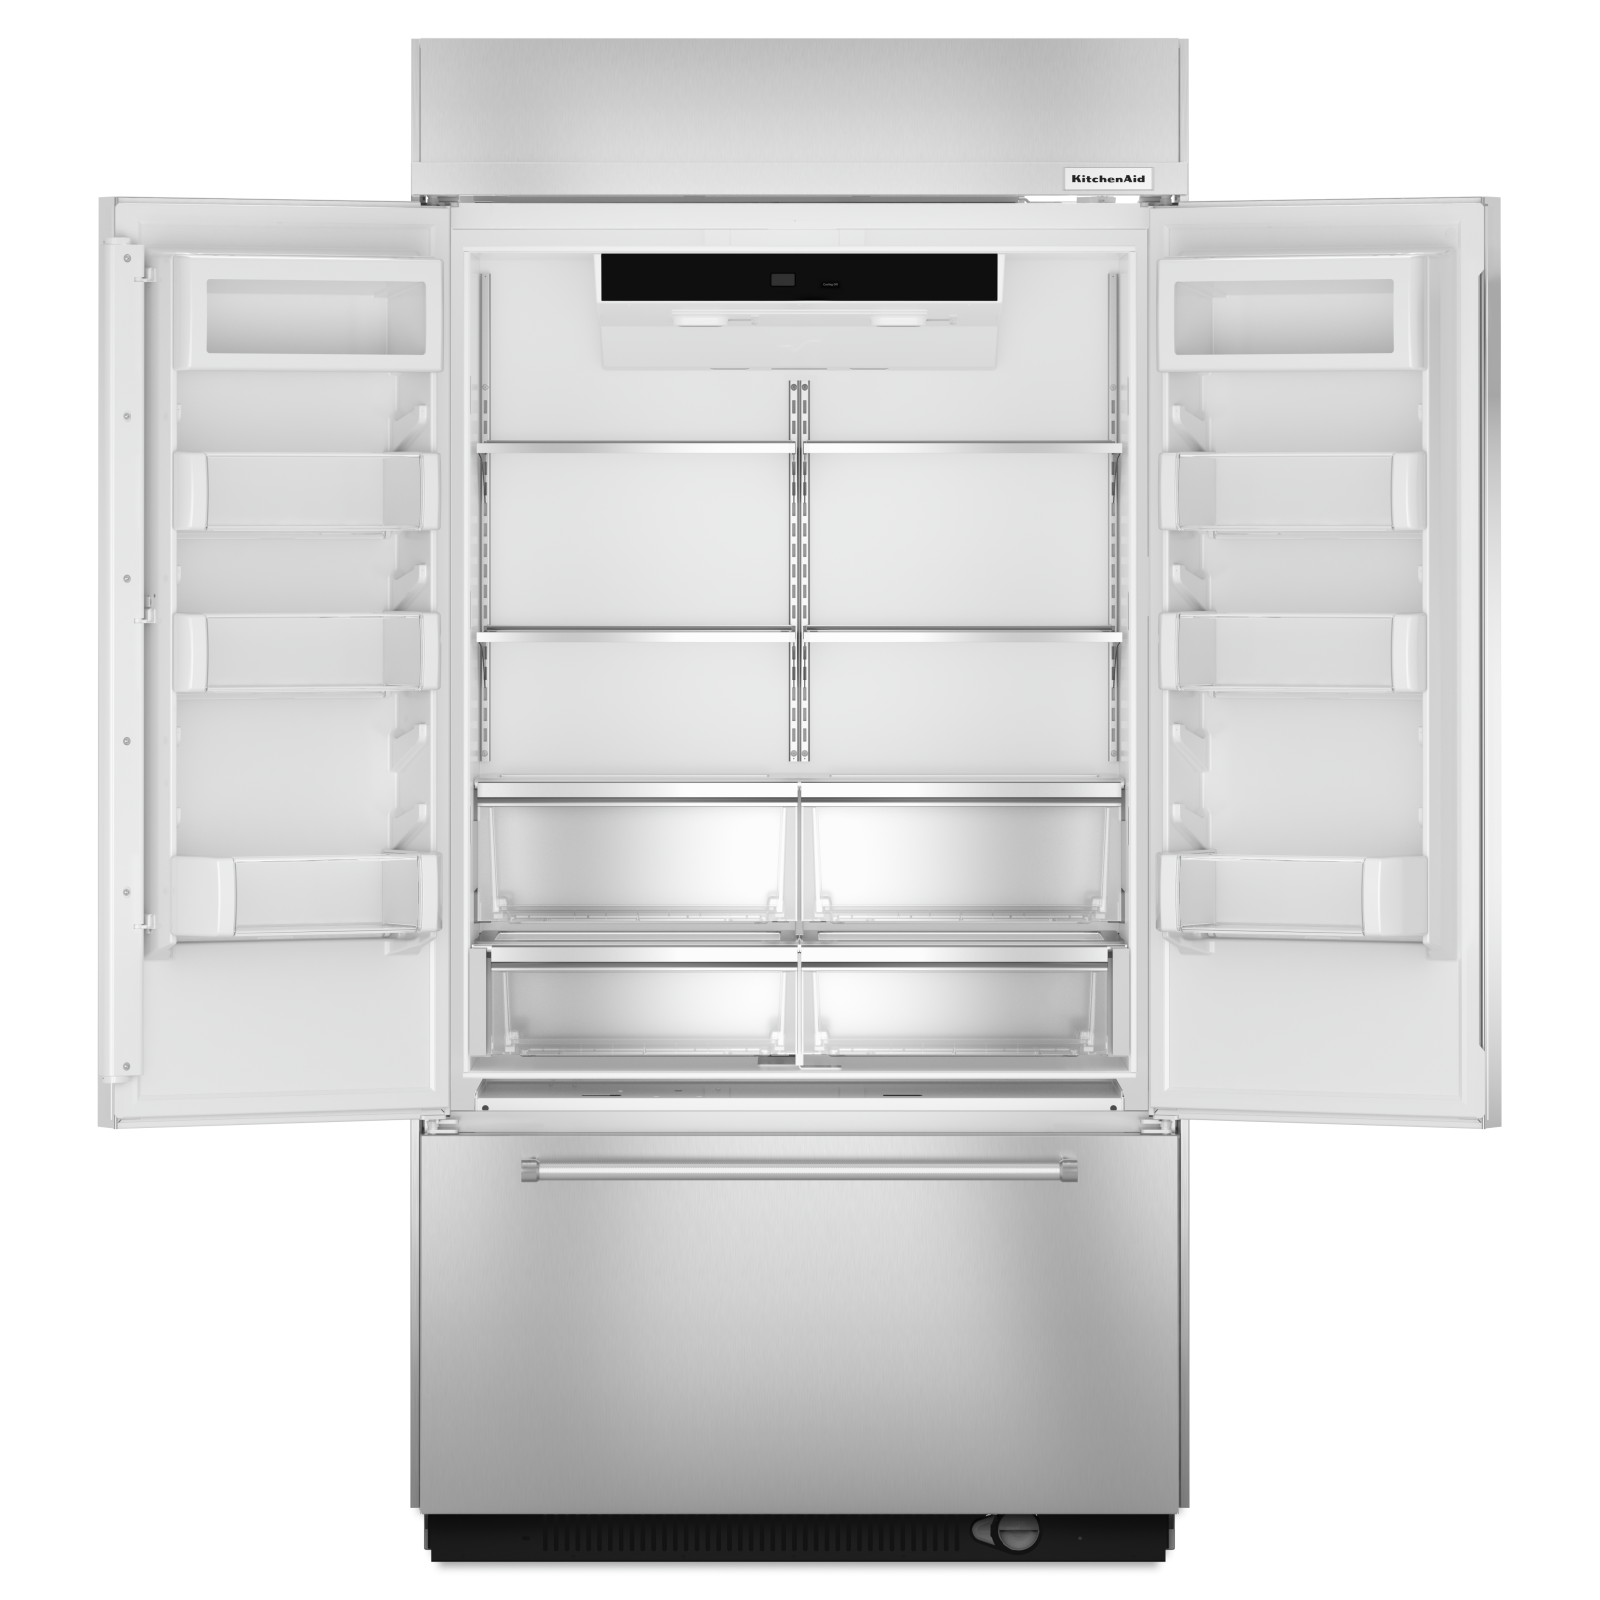 KitchenAid - 42.25 Inch 24.17 cu. ft French Door Refrigerator in Stainless - KBFN402ESS